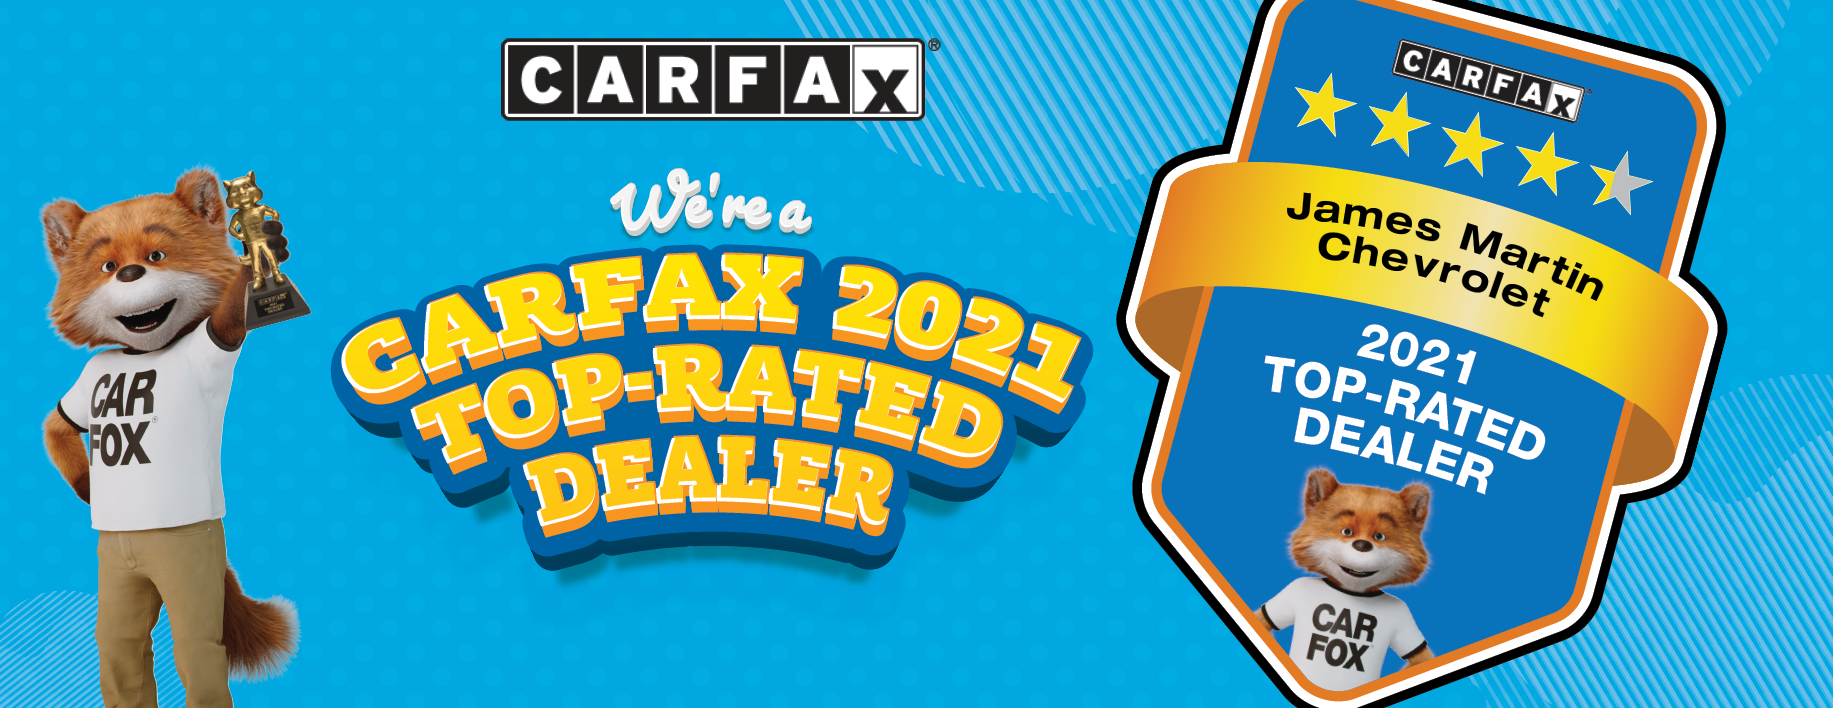 Carfax Top Rated Dealer 2021